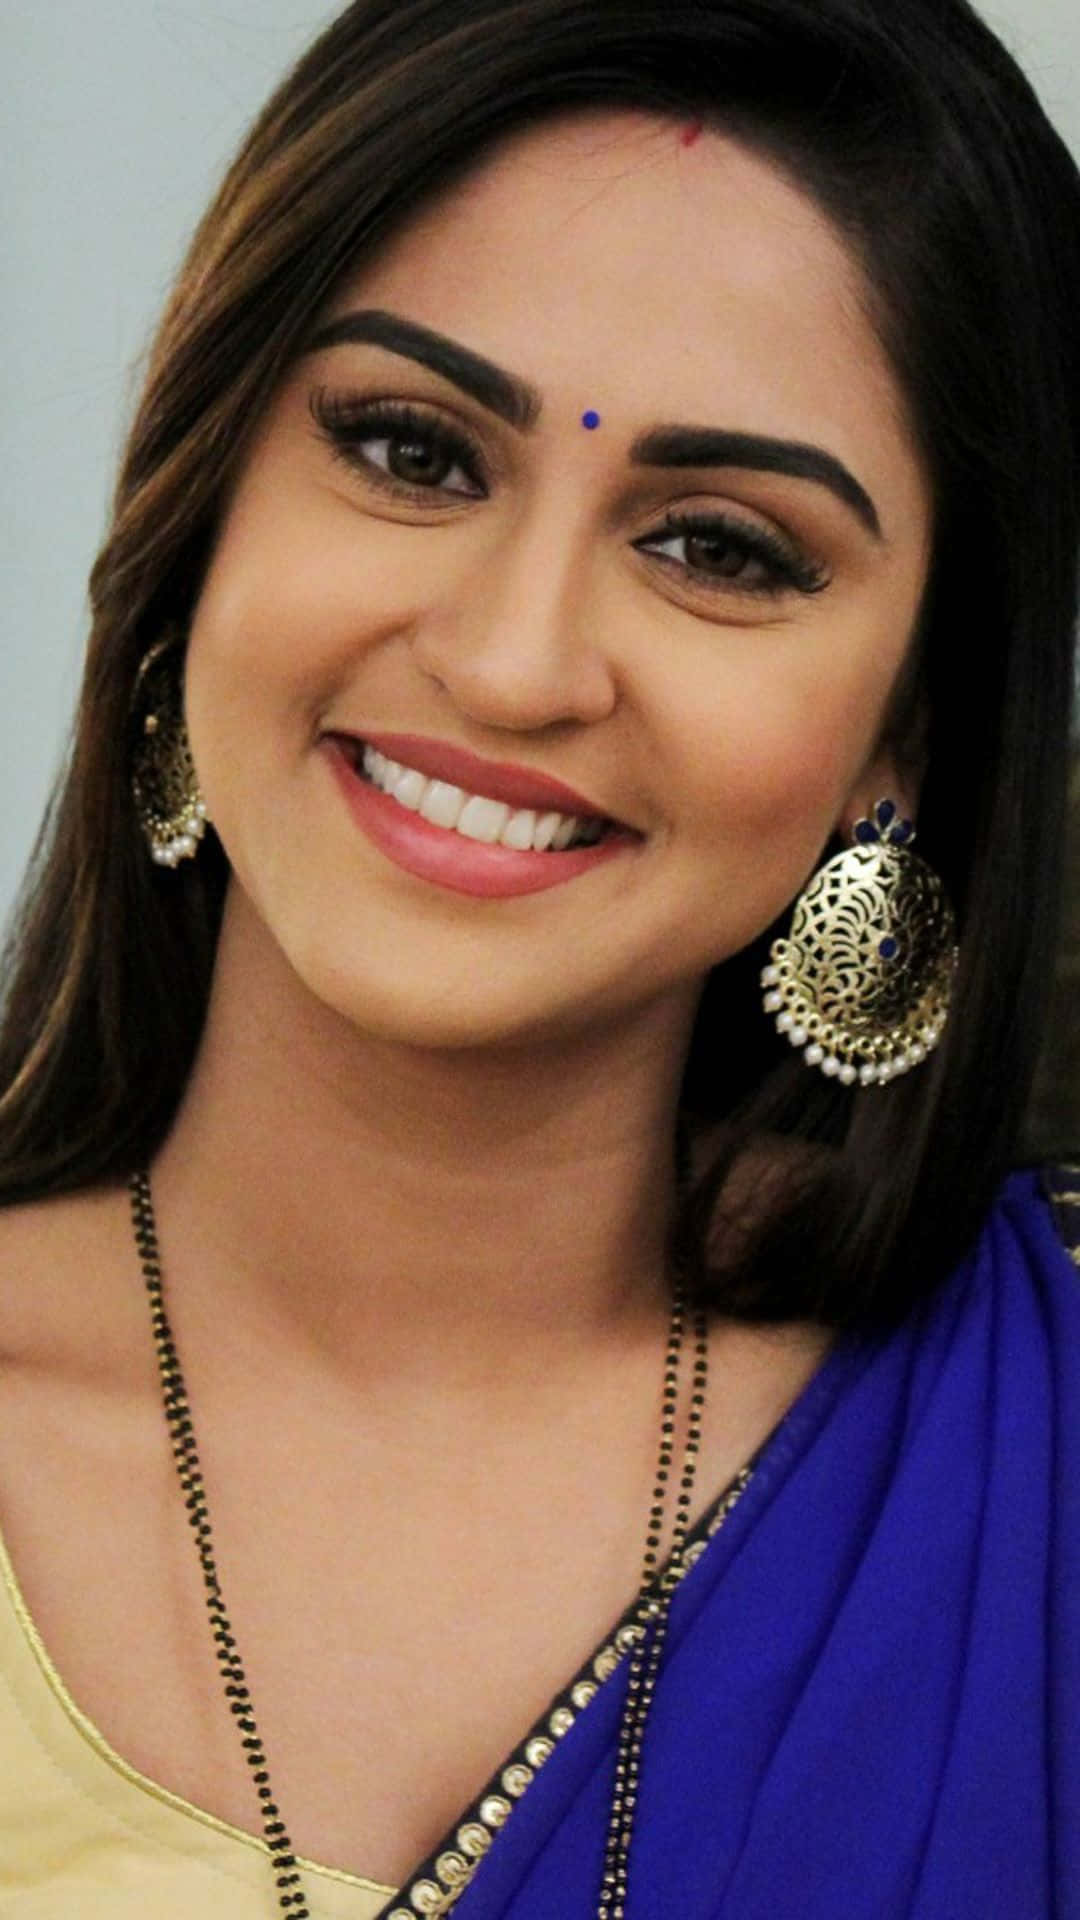 A Beautiful Woman In A Blue Sari Smiling